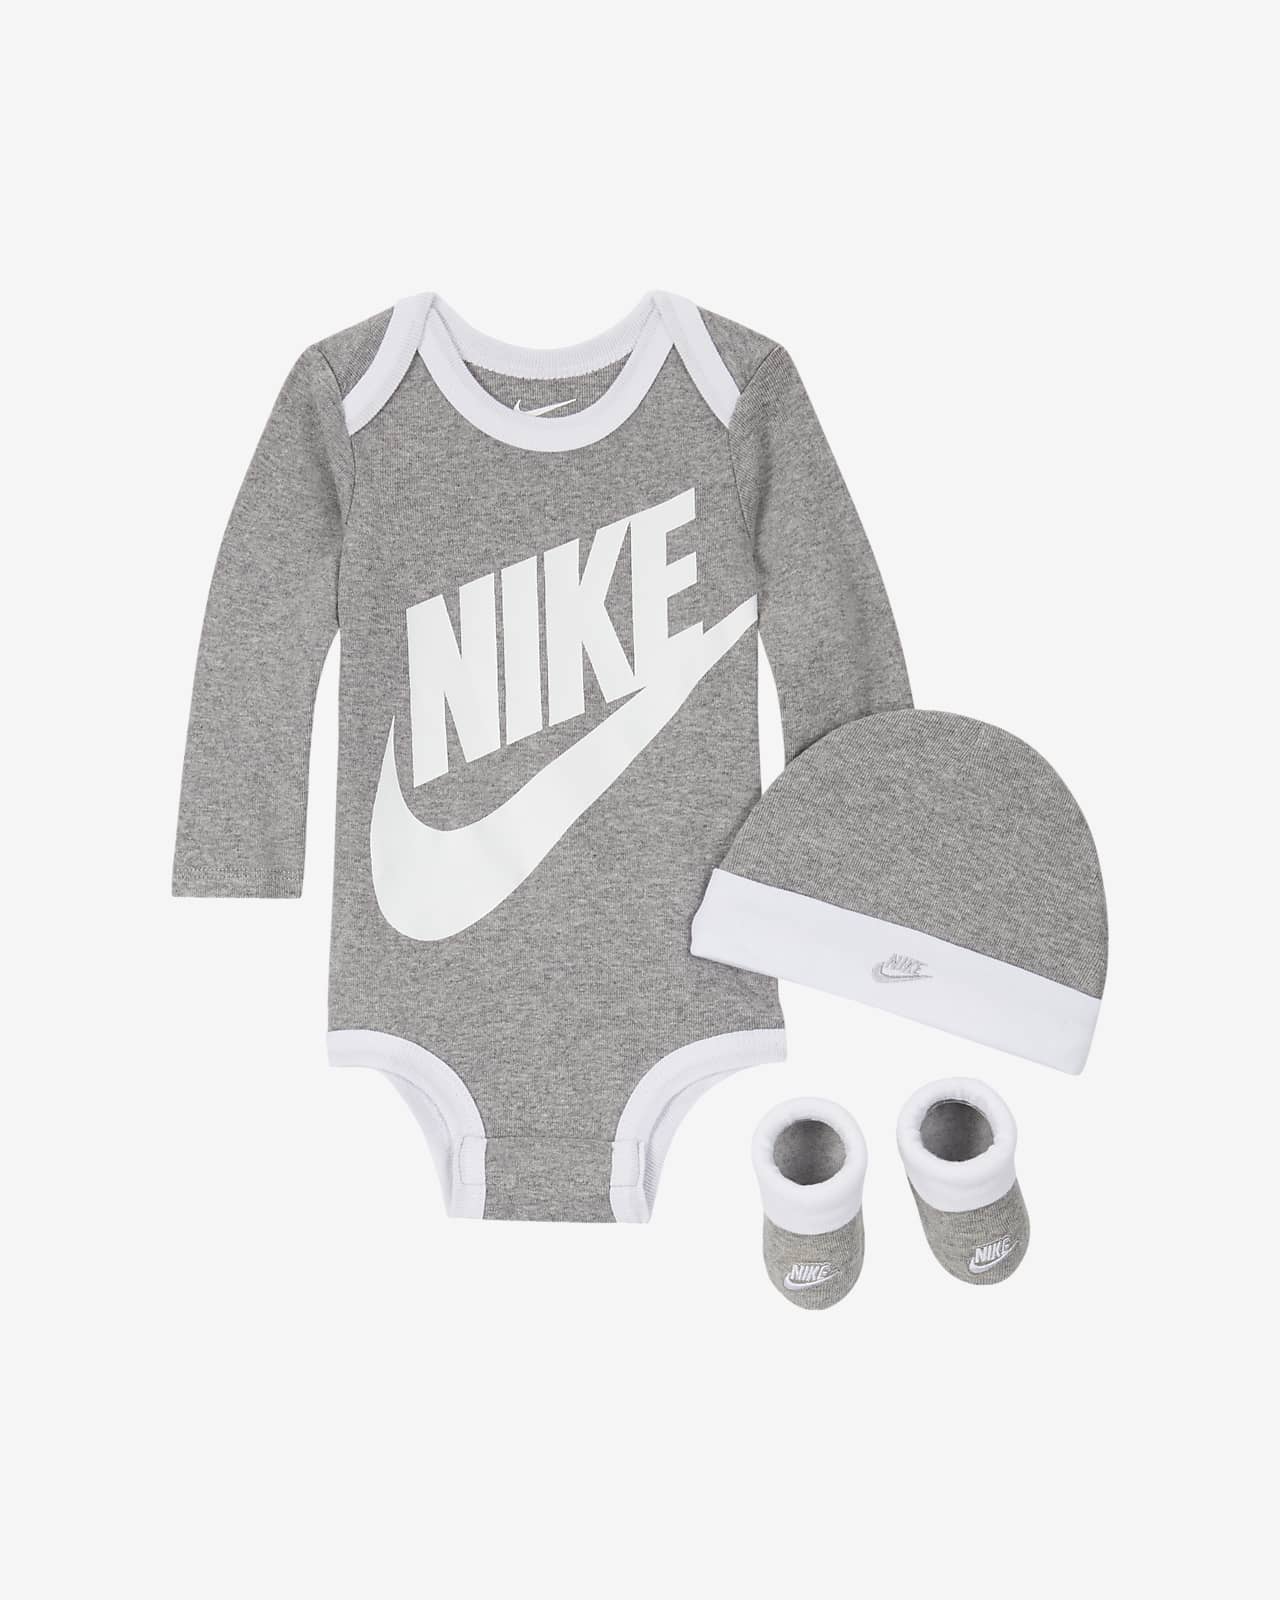 vela Lectura cuidadosa malicioso Conjunto de body, gorro y calzado para bebés (0 a 6 meses) Nike. Nike.com